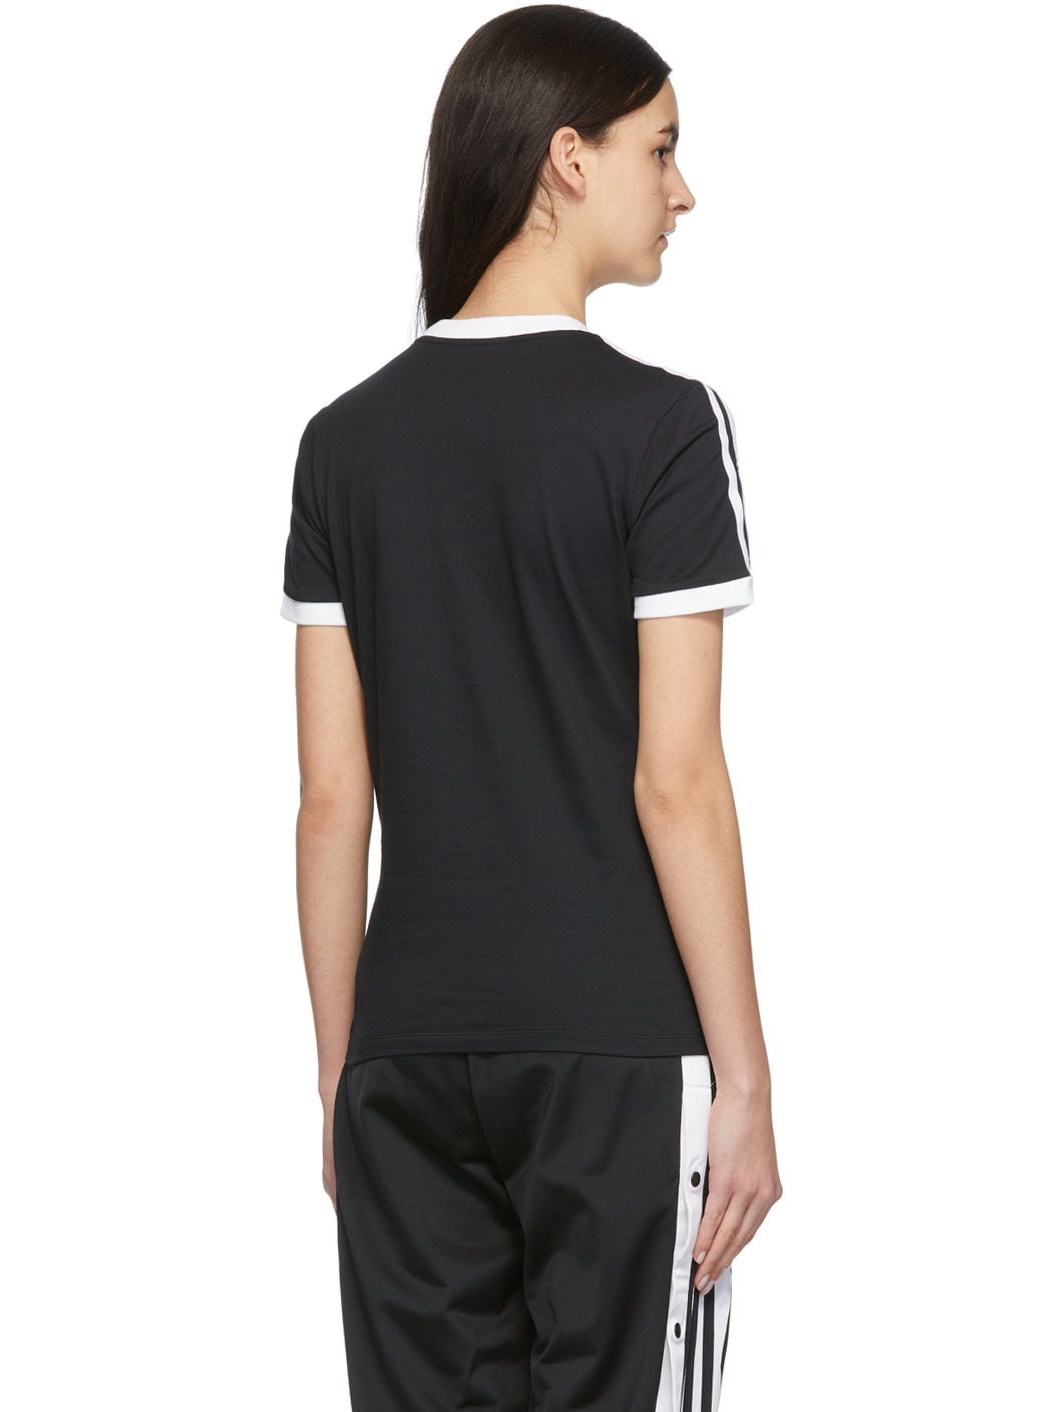 Black Adicolor 3 Stripes T-Shirt - 3